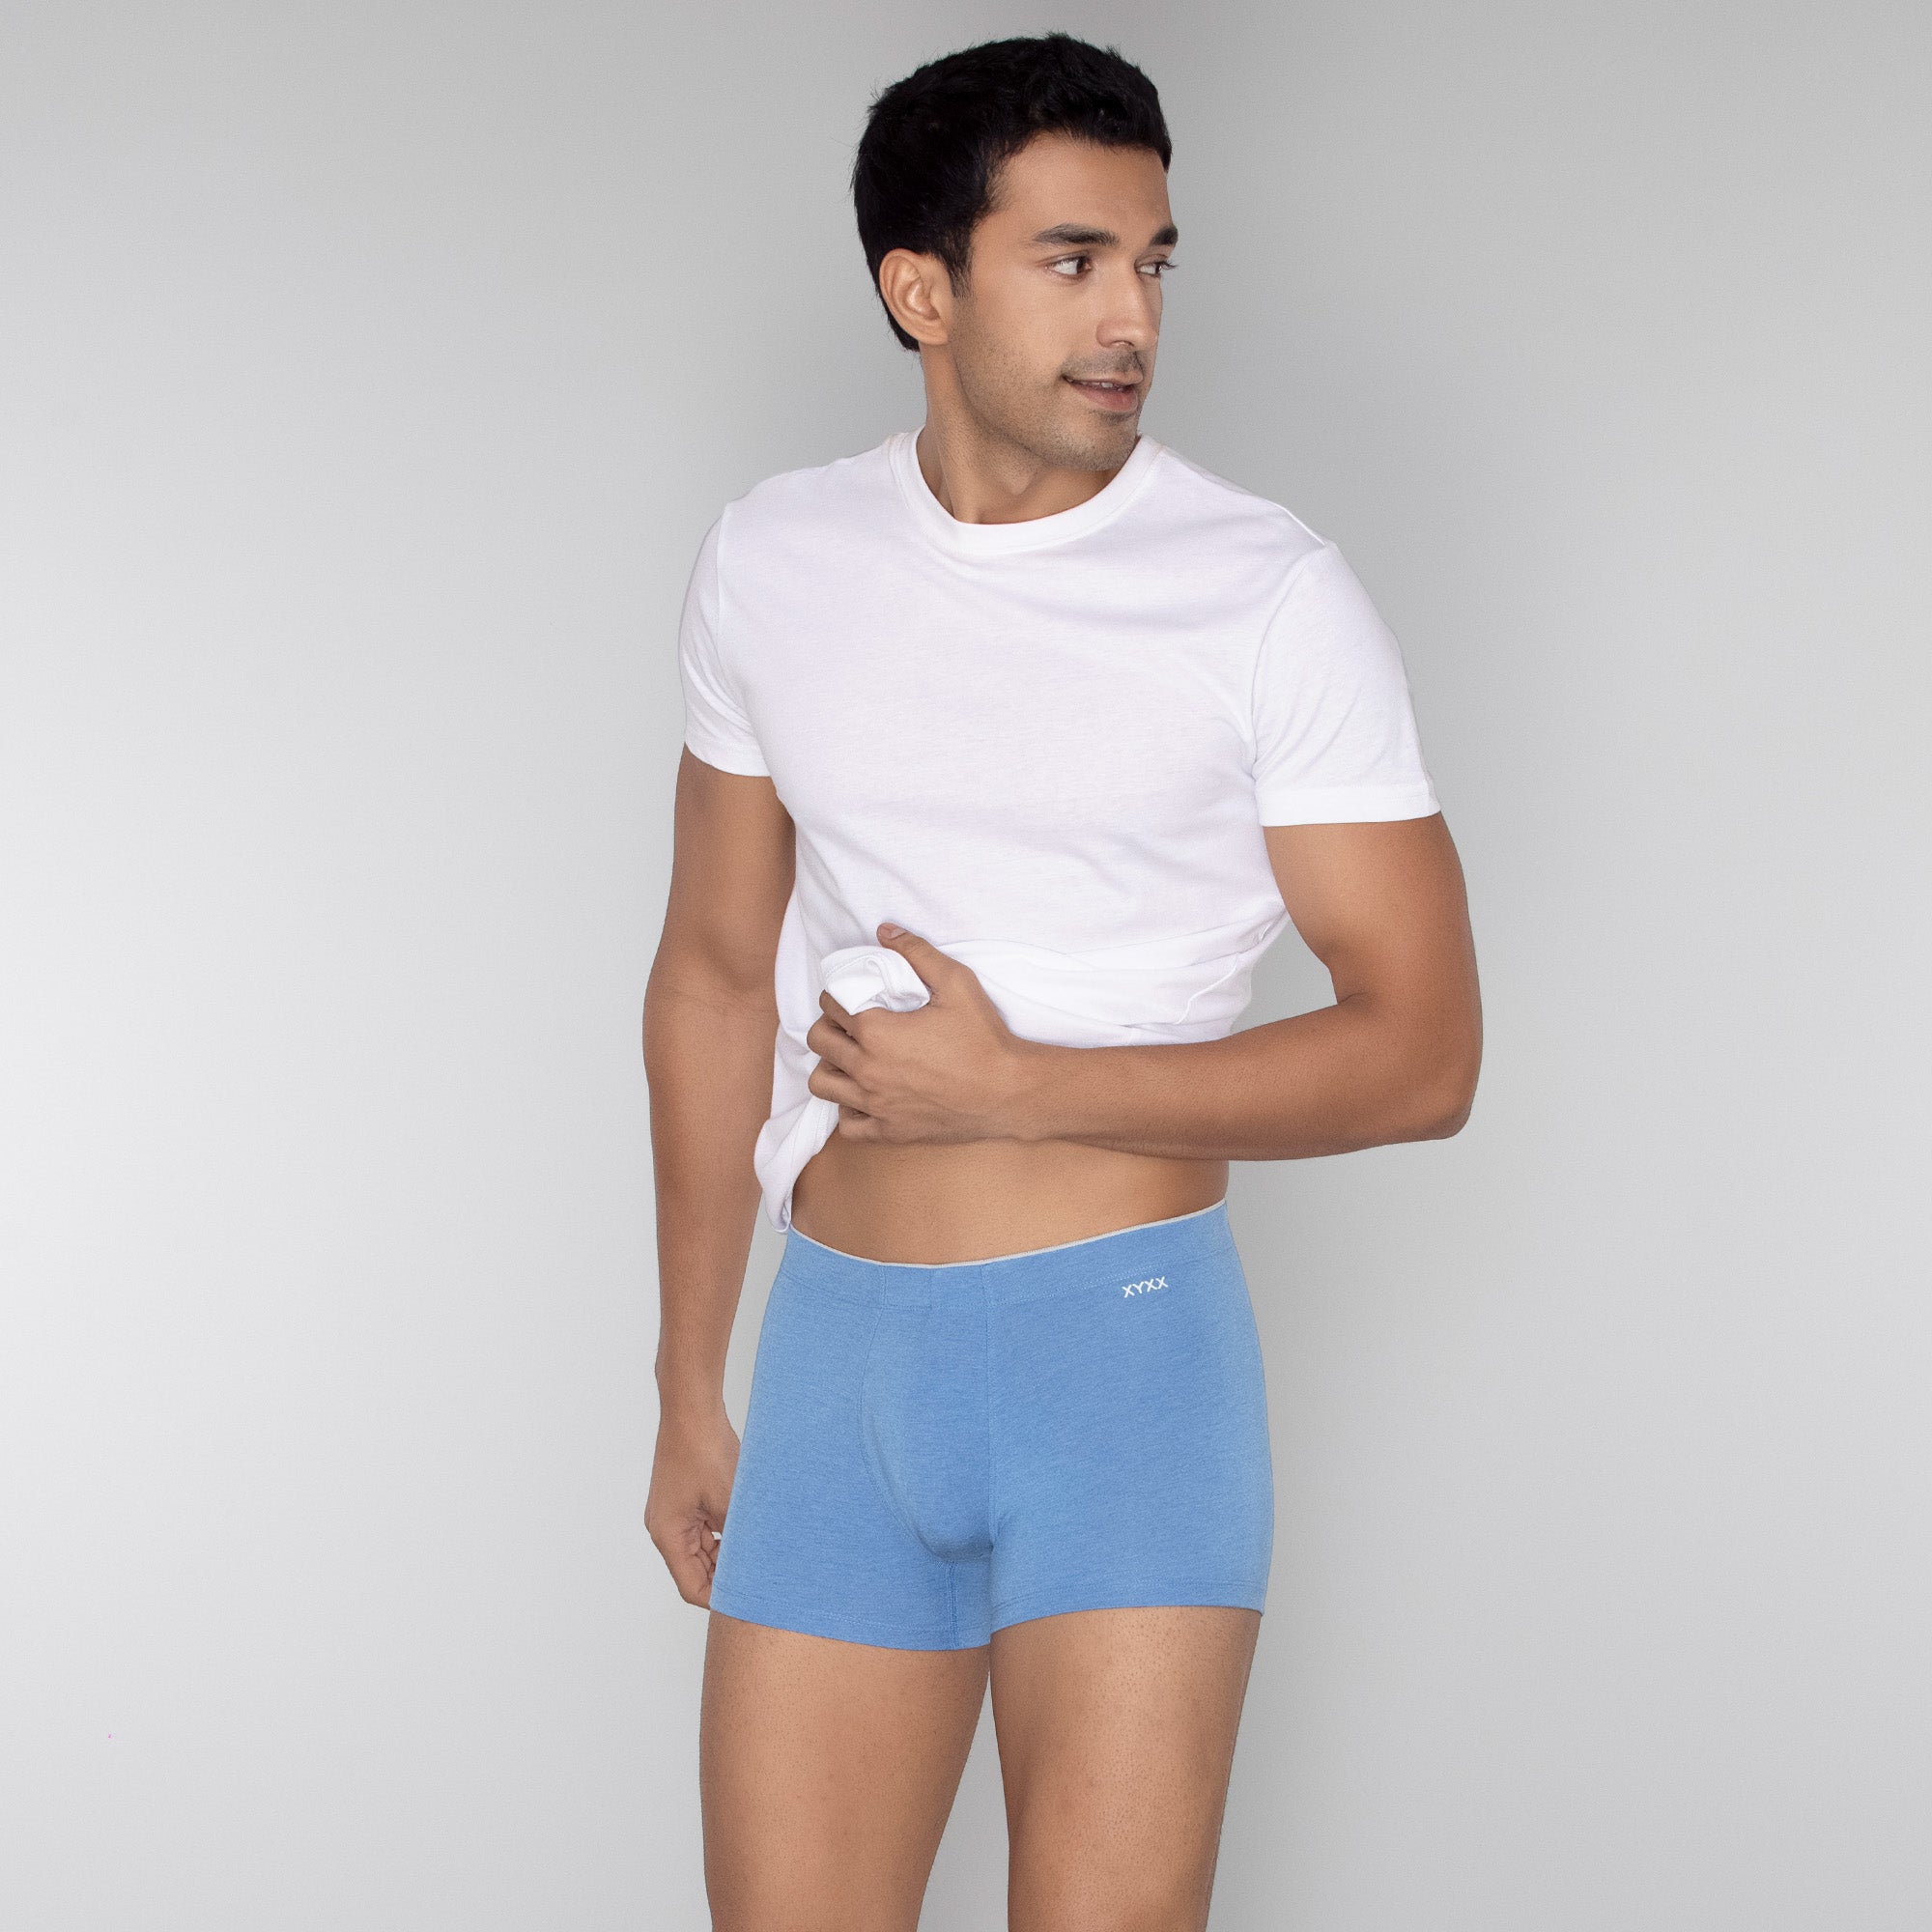 XYXX Uno Medley TENCEL Modal Trunk Premium Underwear For Men at Rs